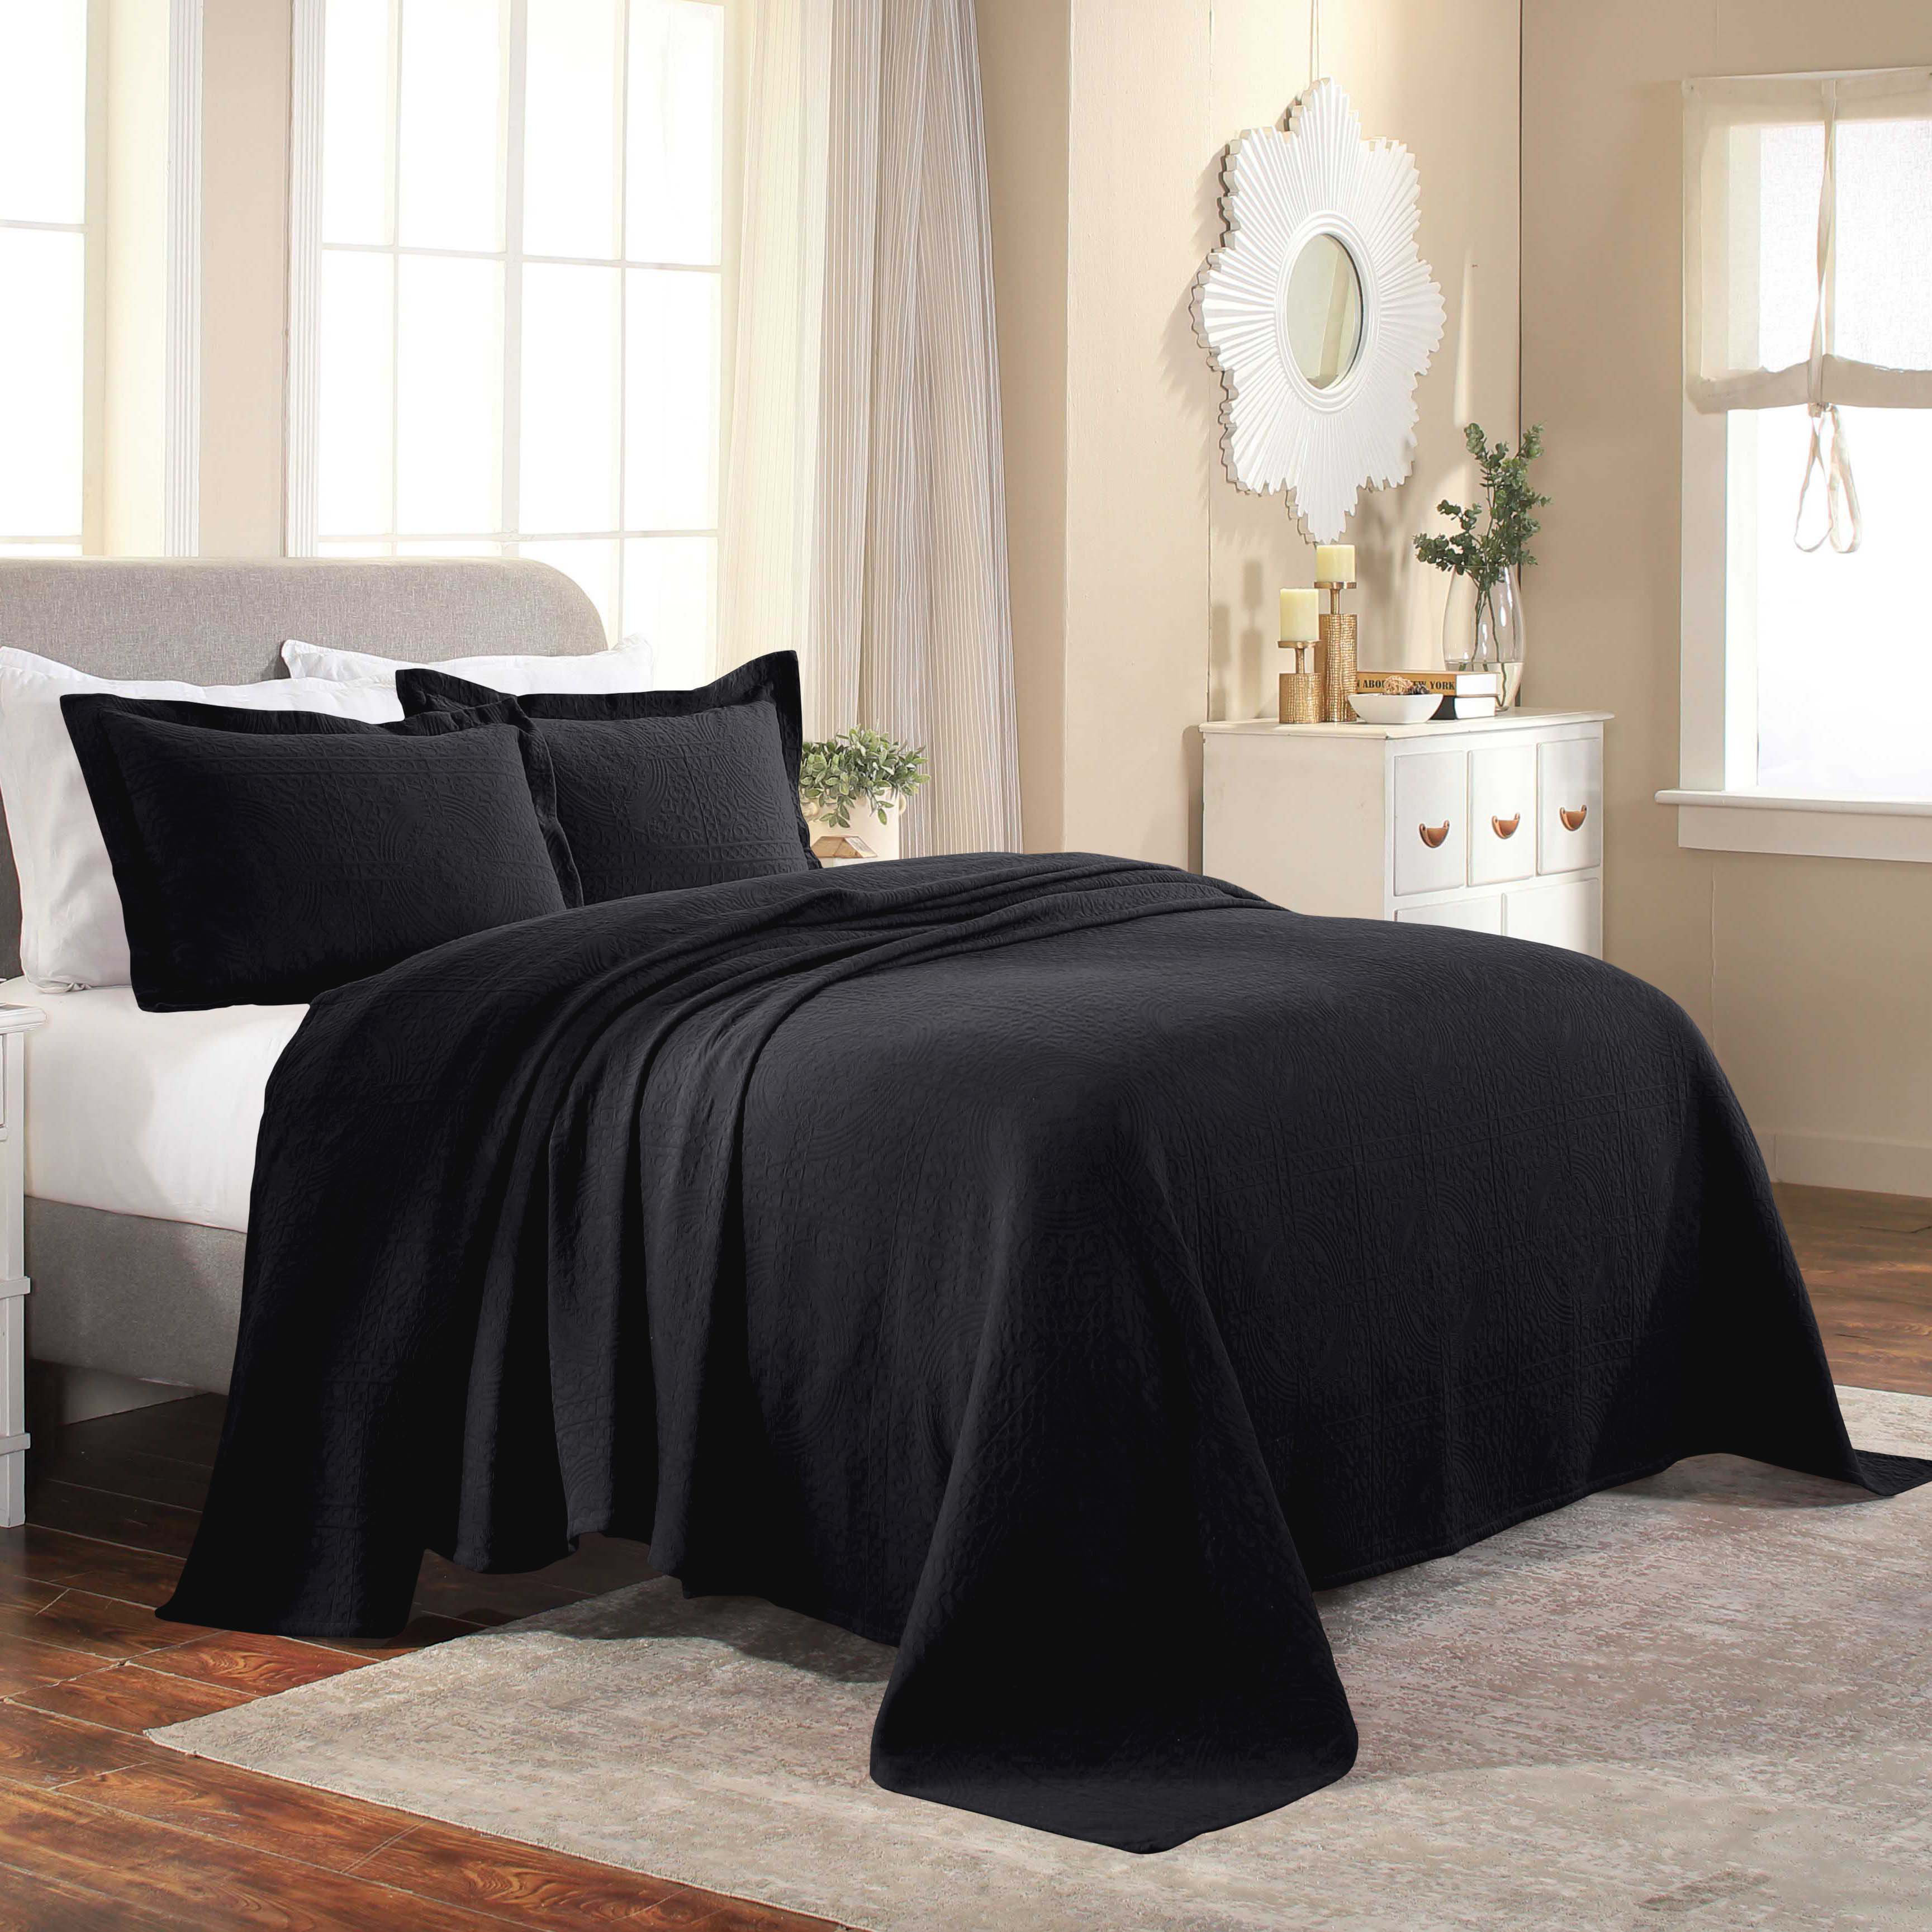  Basic Beyond Queen Comforter Set - Black Comforter Set Queen,  Reversible Bed Comforter Queen Set for All Seasons, Black/Grey, 1 Comforter  (88x92) and 2 Pillow Shams (20x26+2) : Home & Kitchen